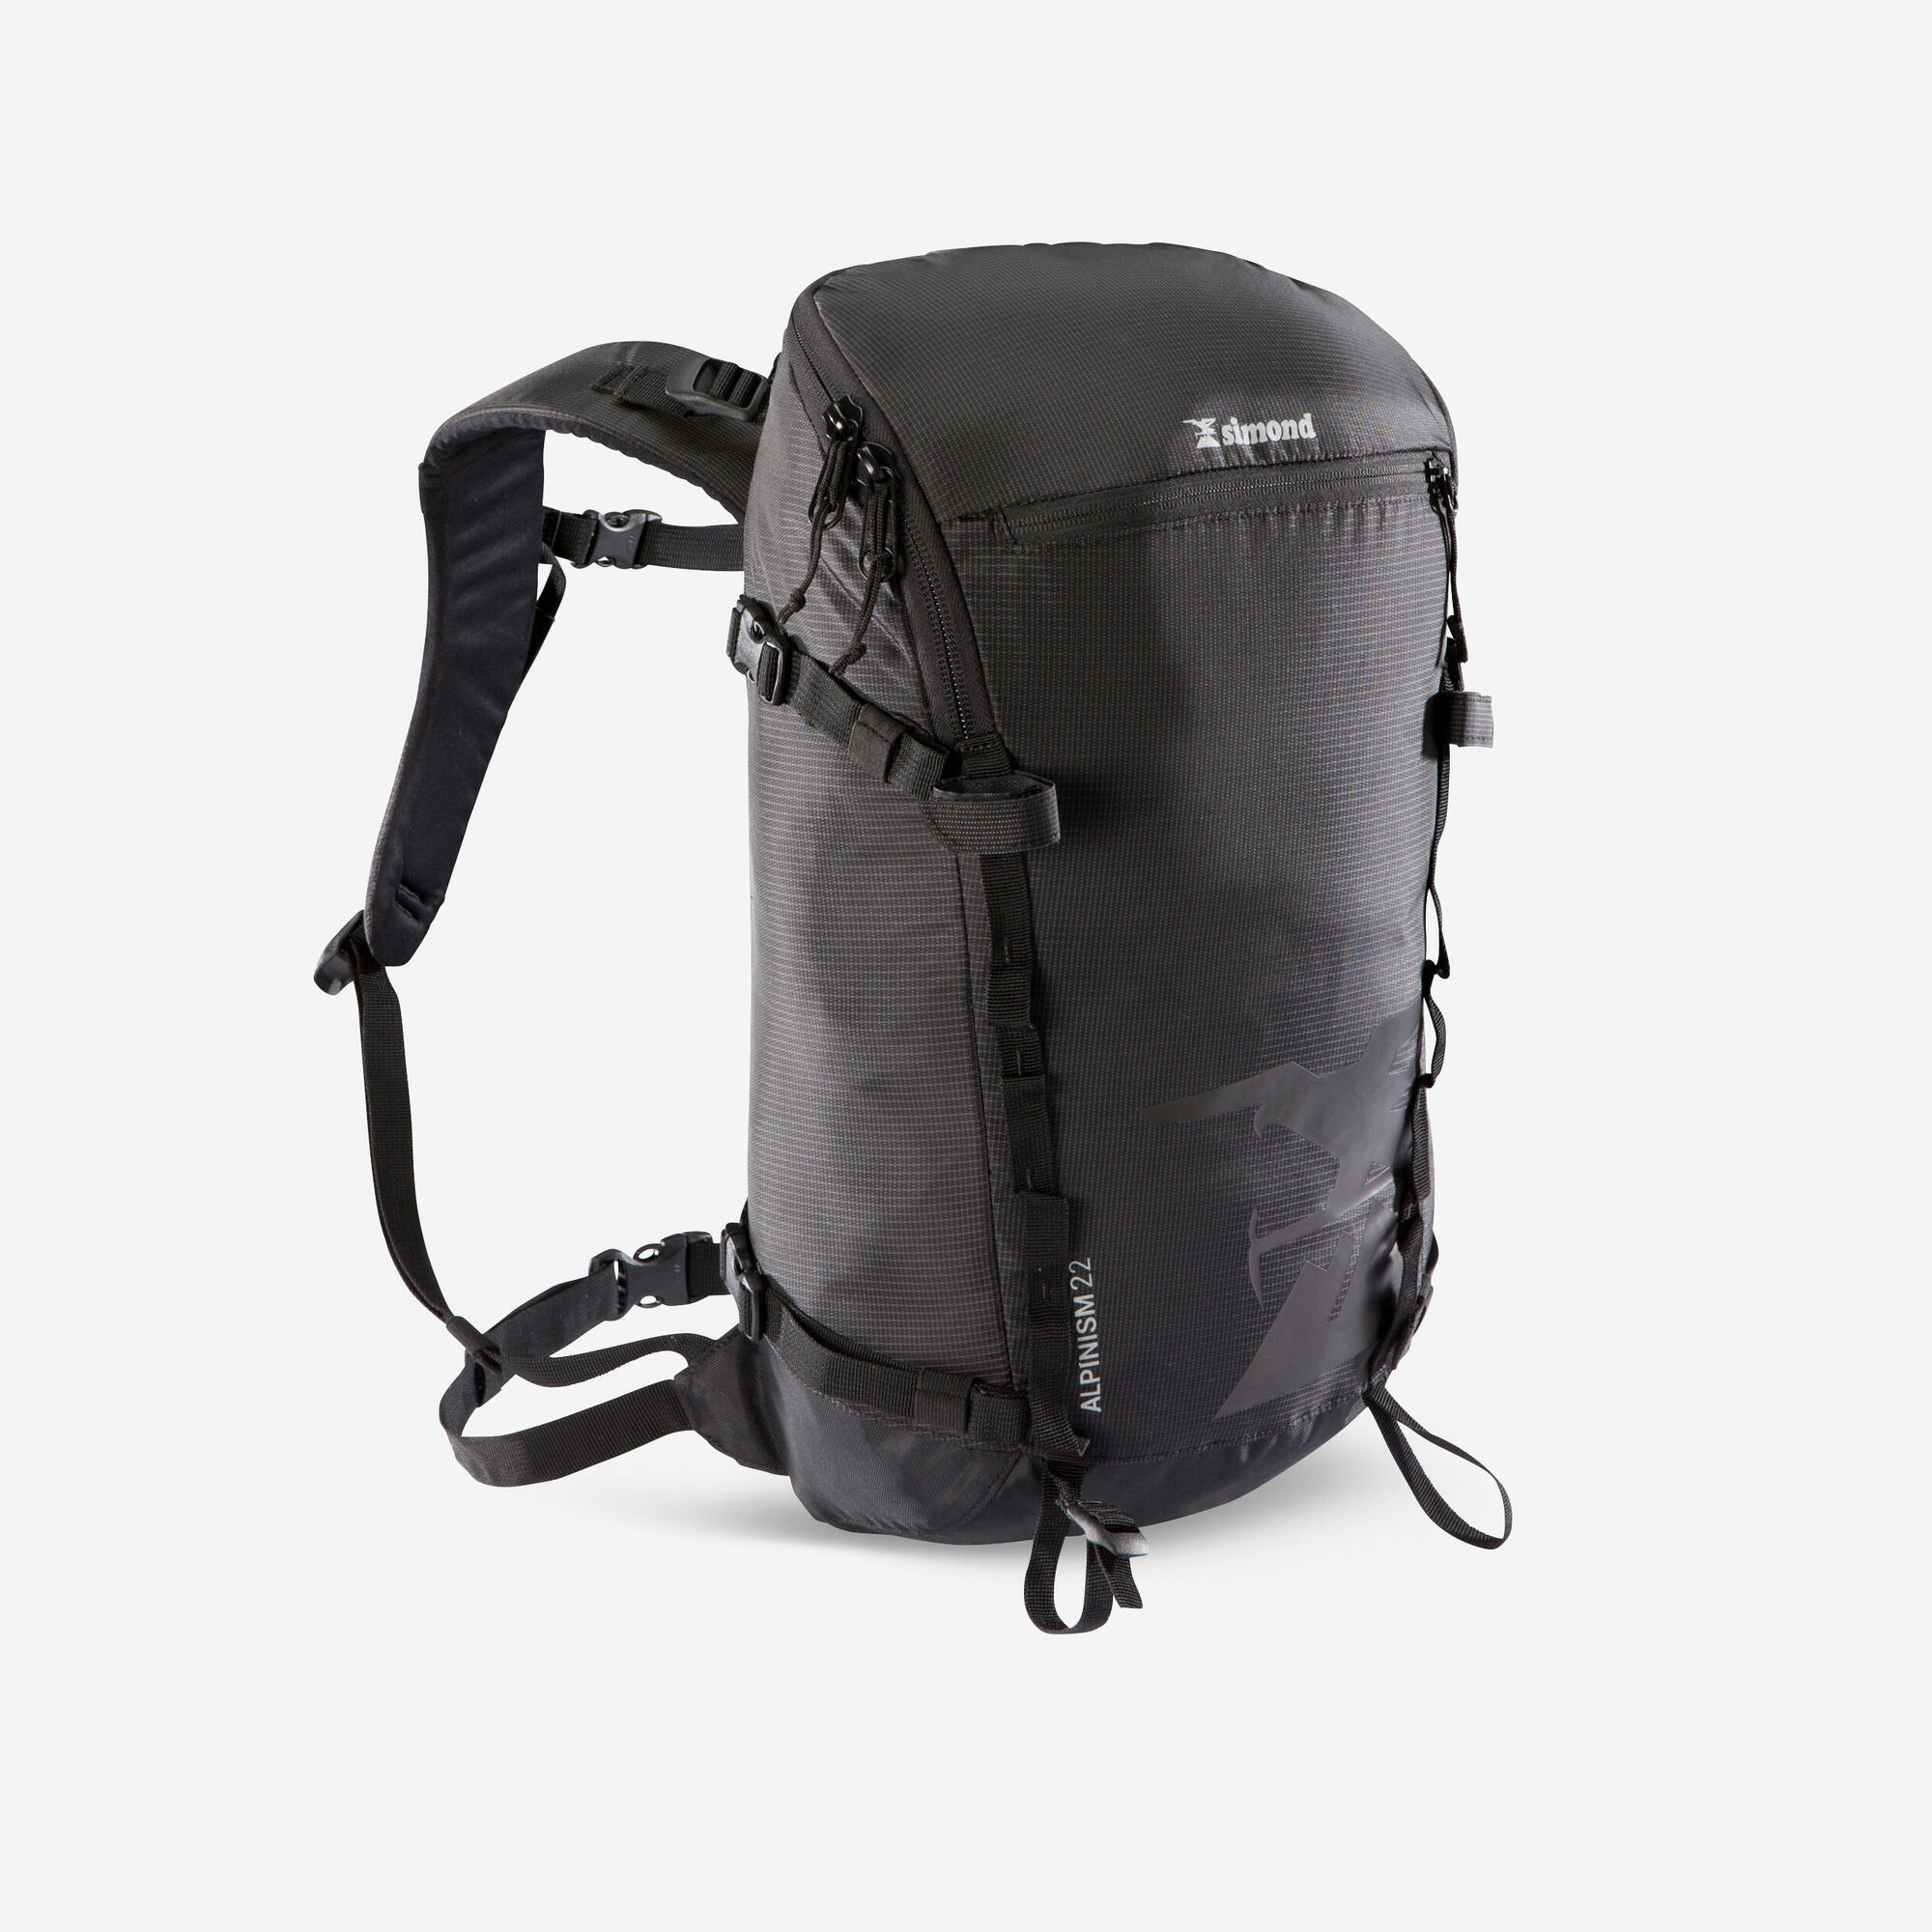 mountaineering backpack size